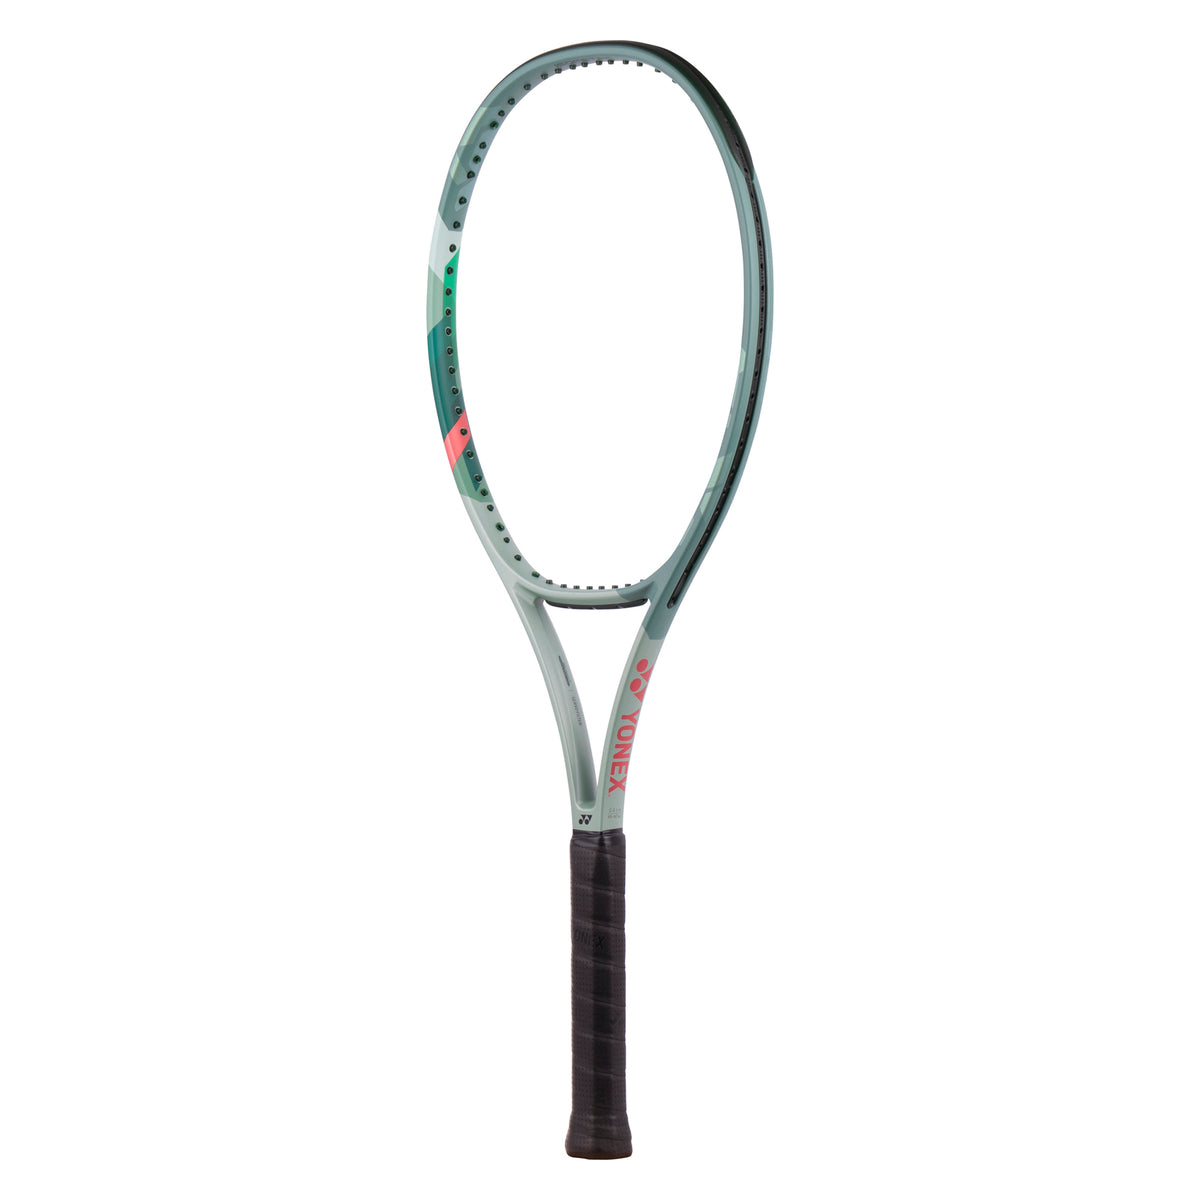 Yonex Percept 100 300g Tennis Racket (Free Restring) - Unstrung